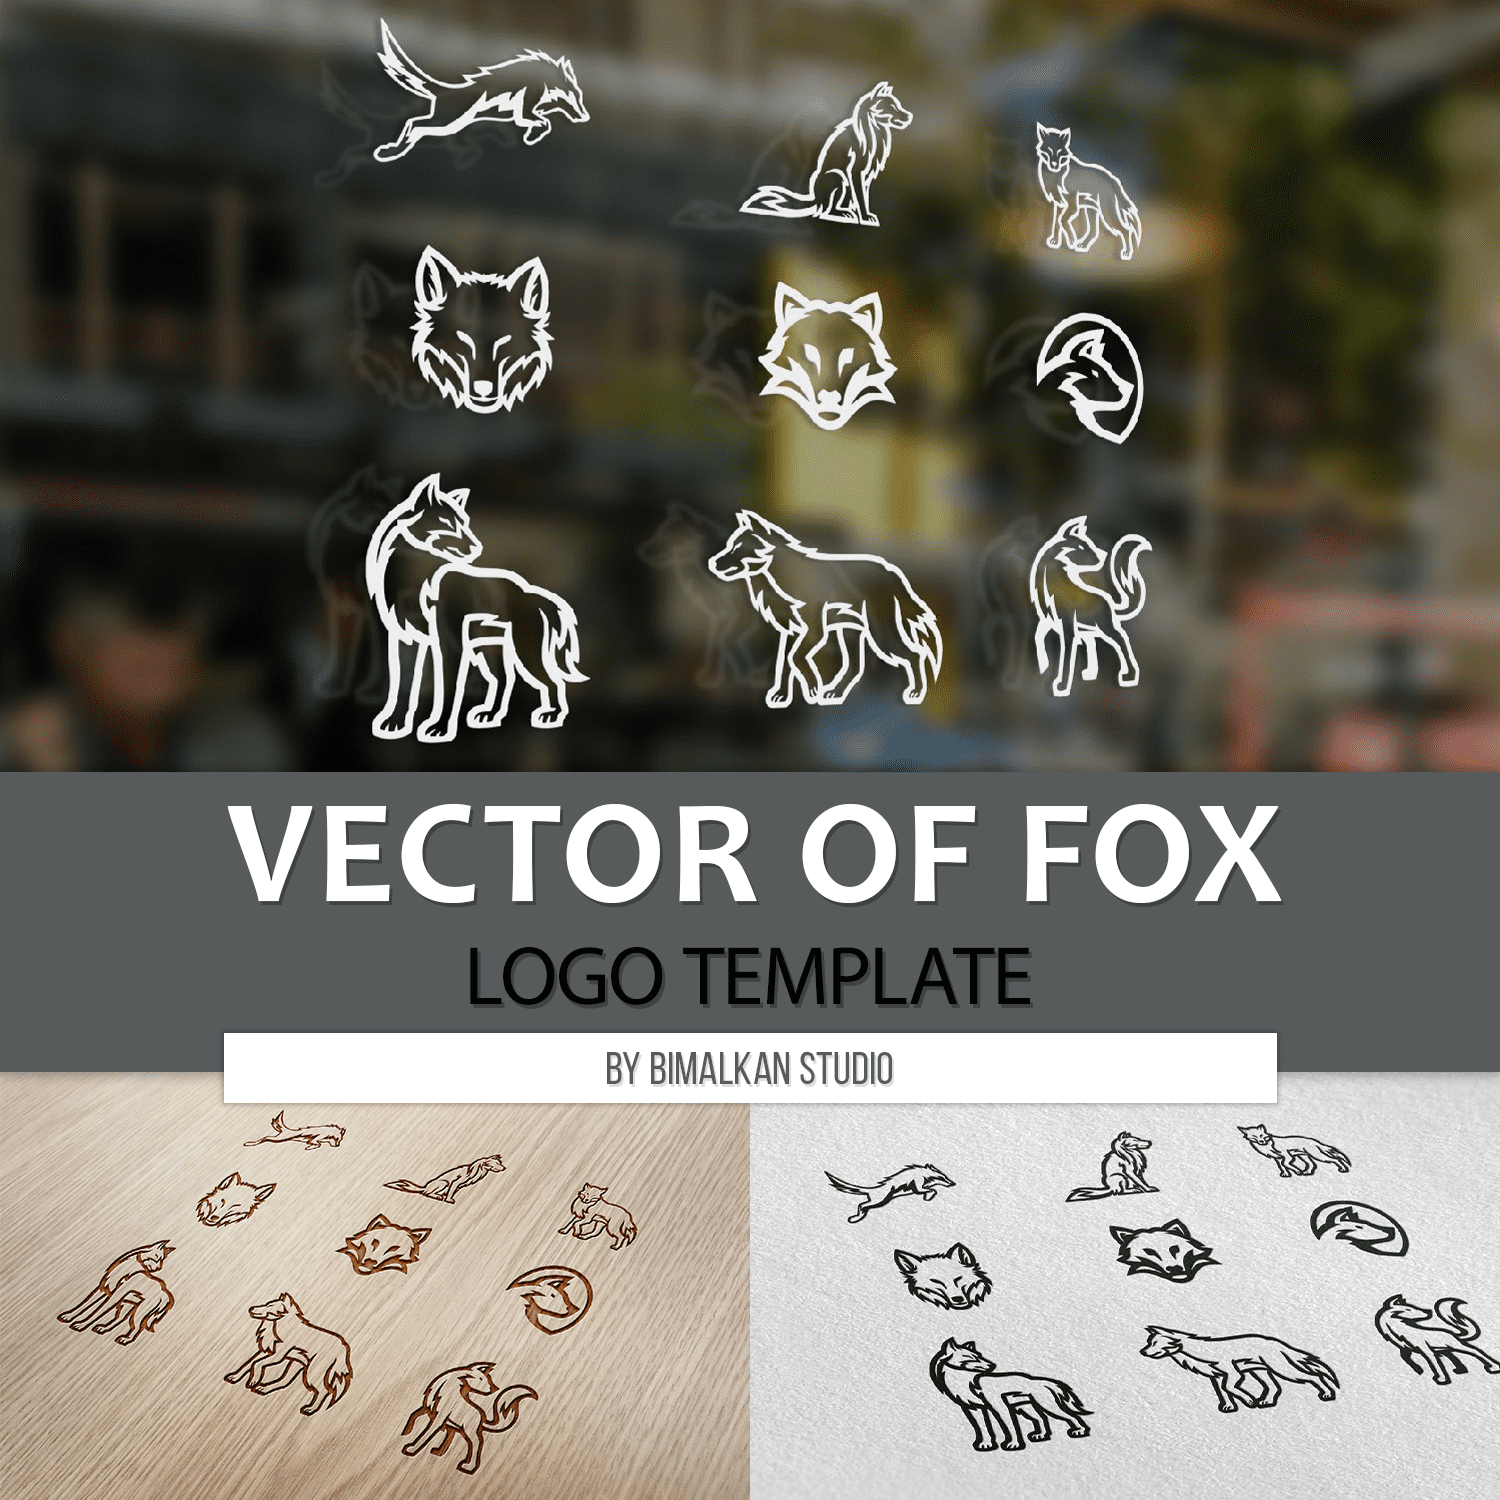 Vector of fox logo template created by Bimalkan Studio.